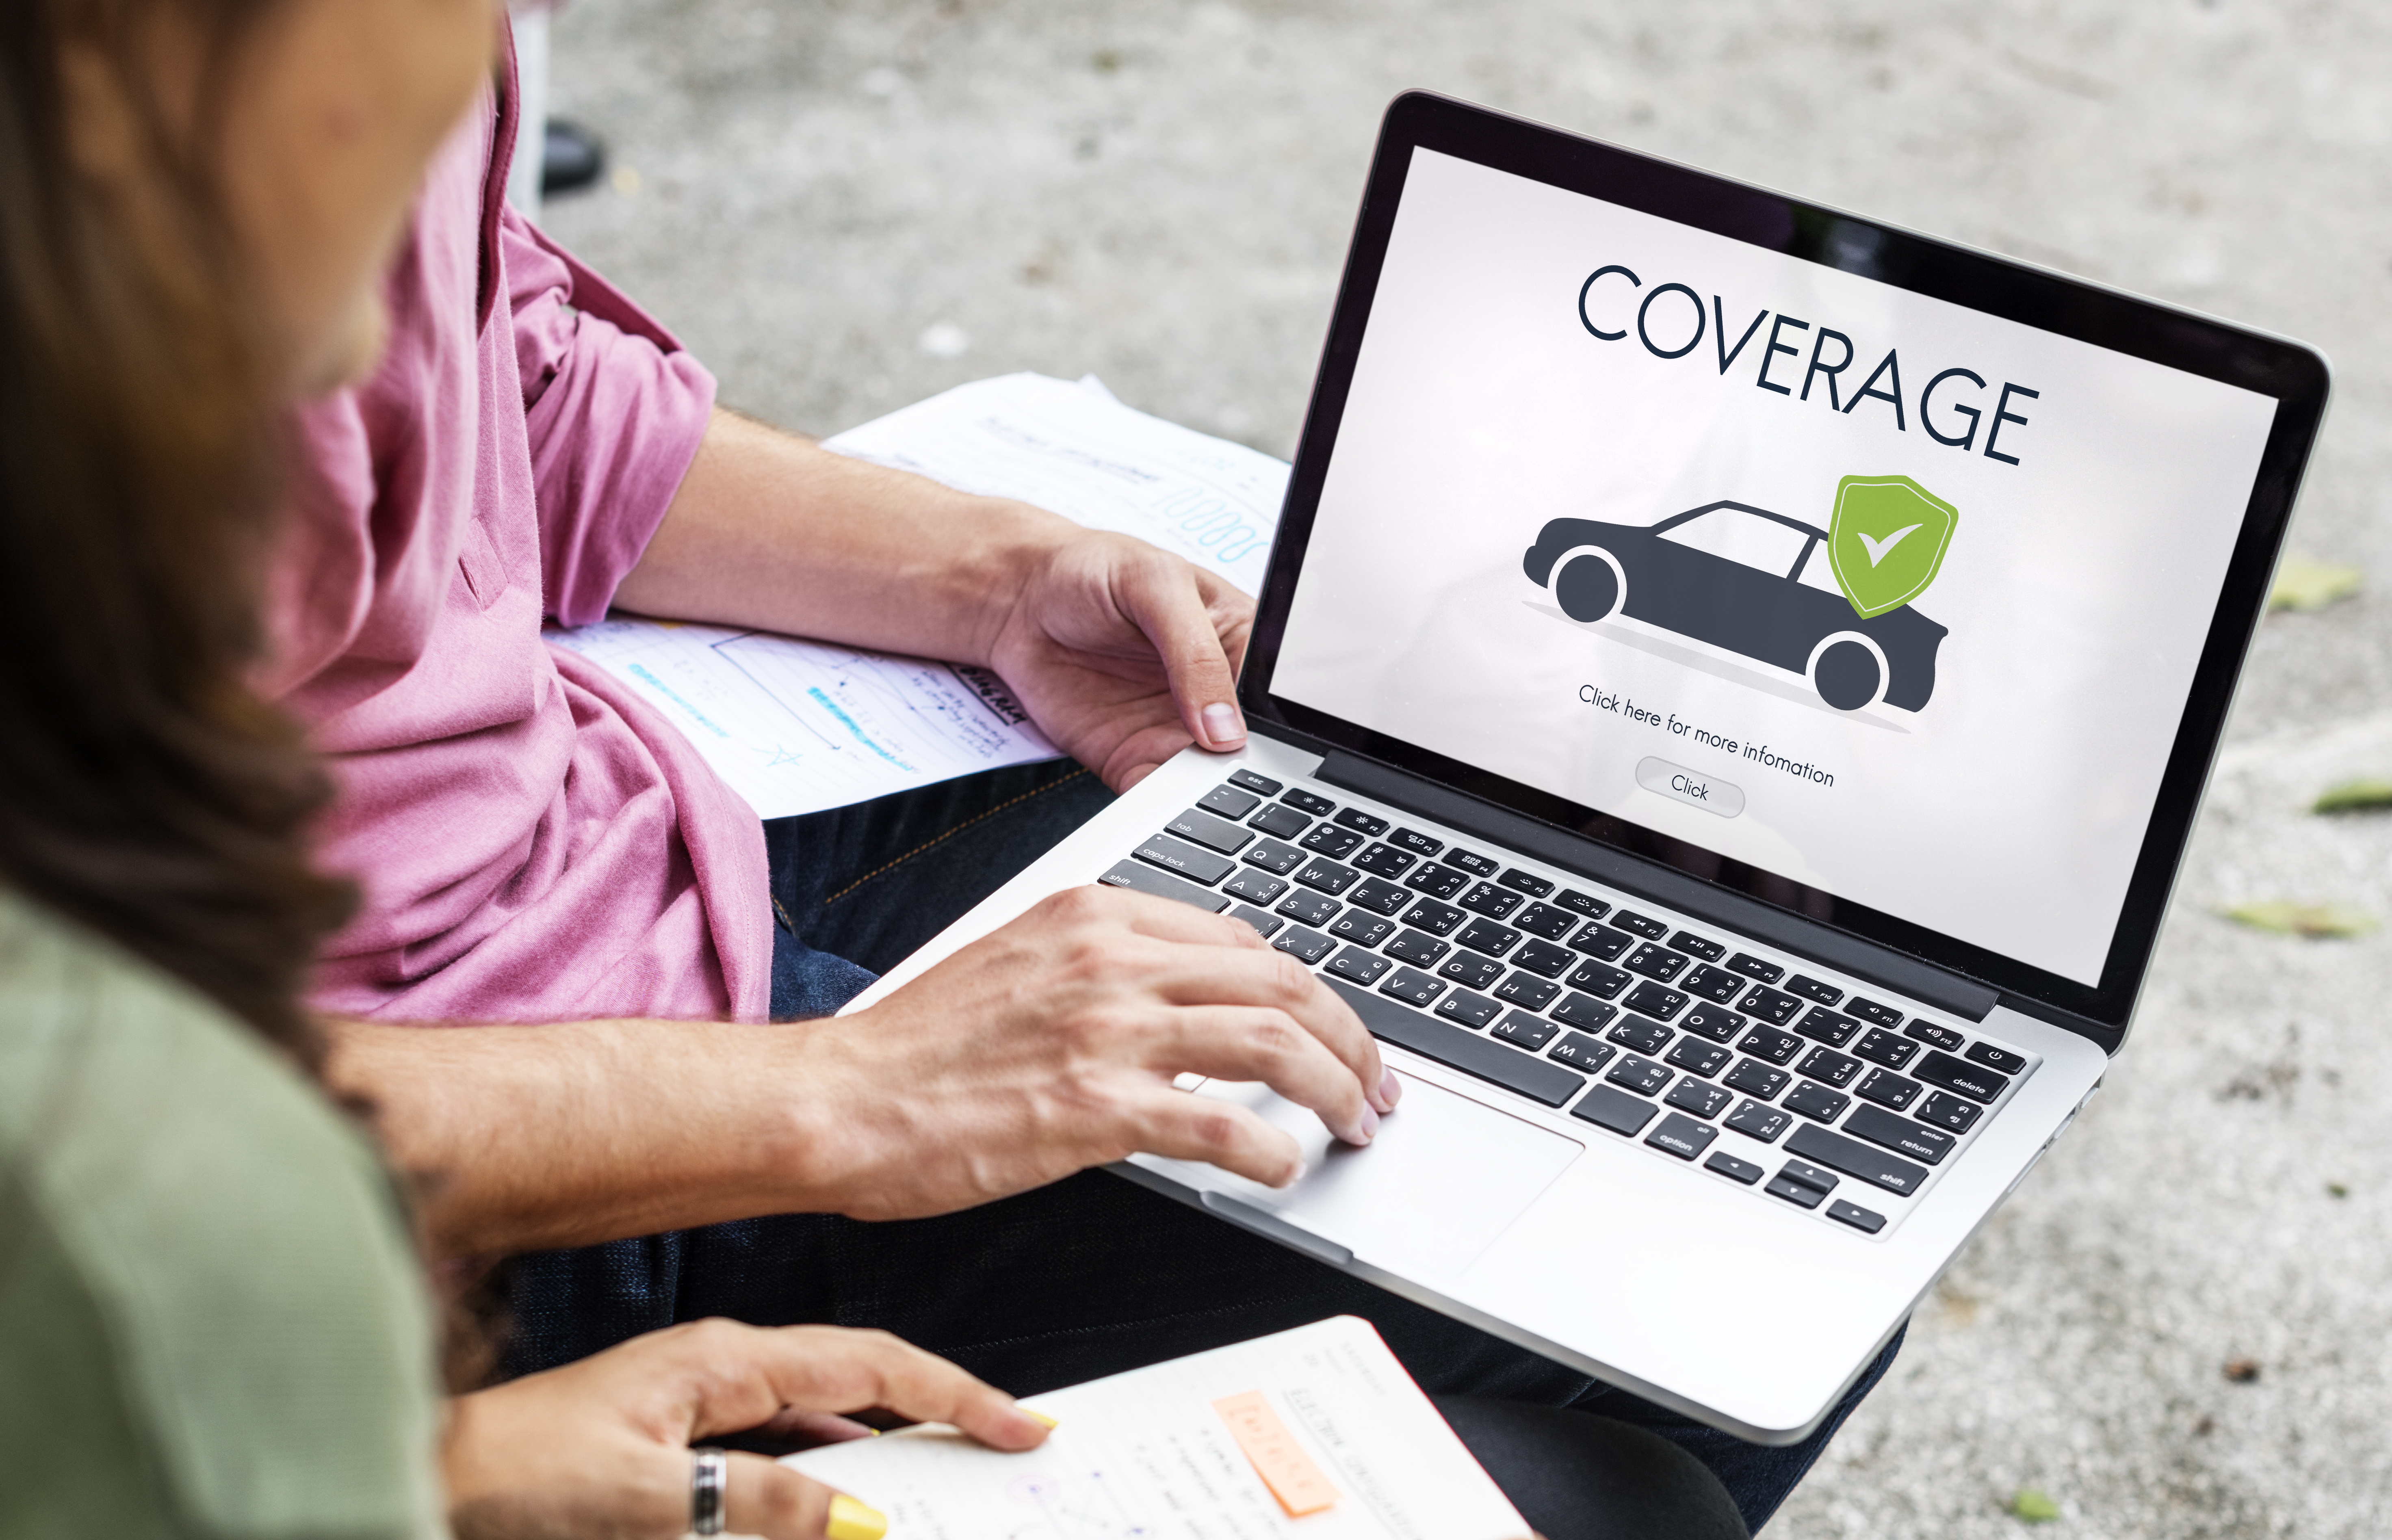 car-coverage-laptop